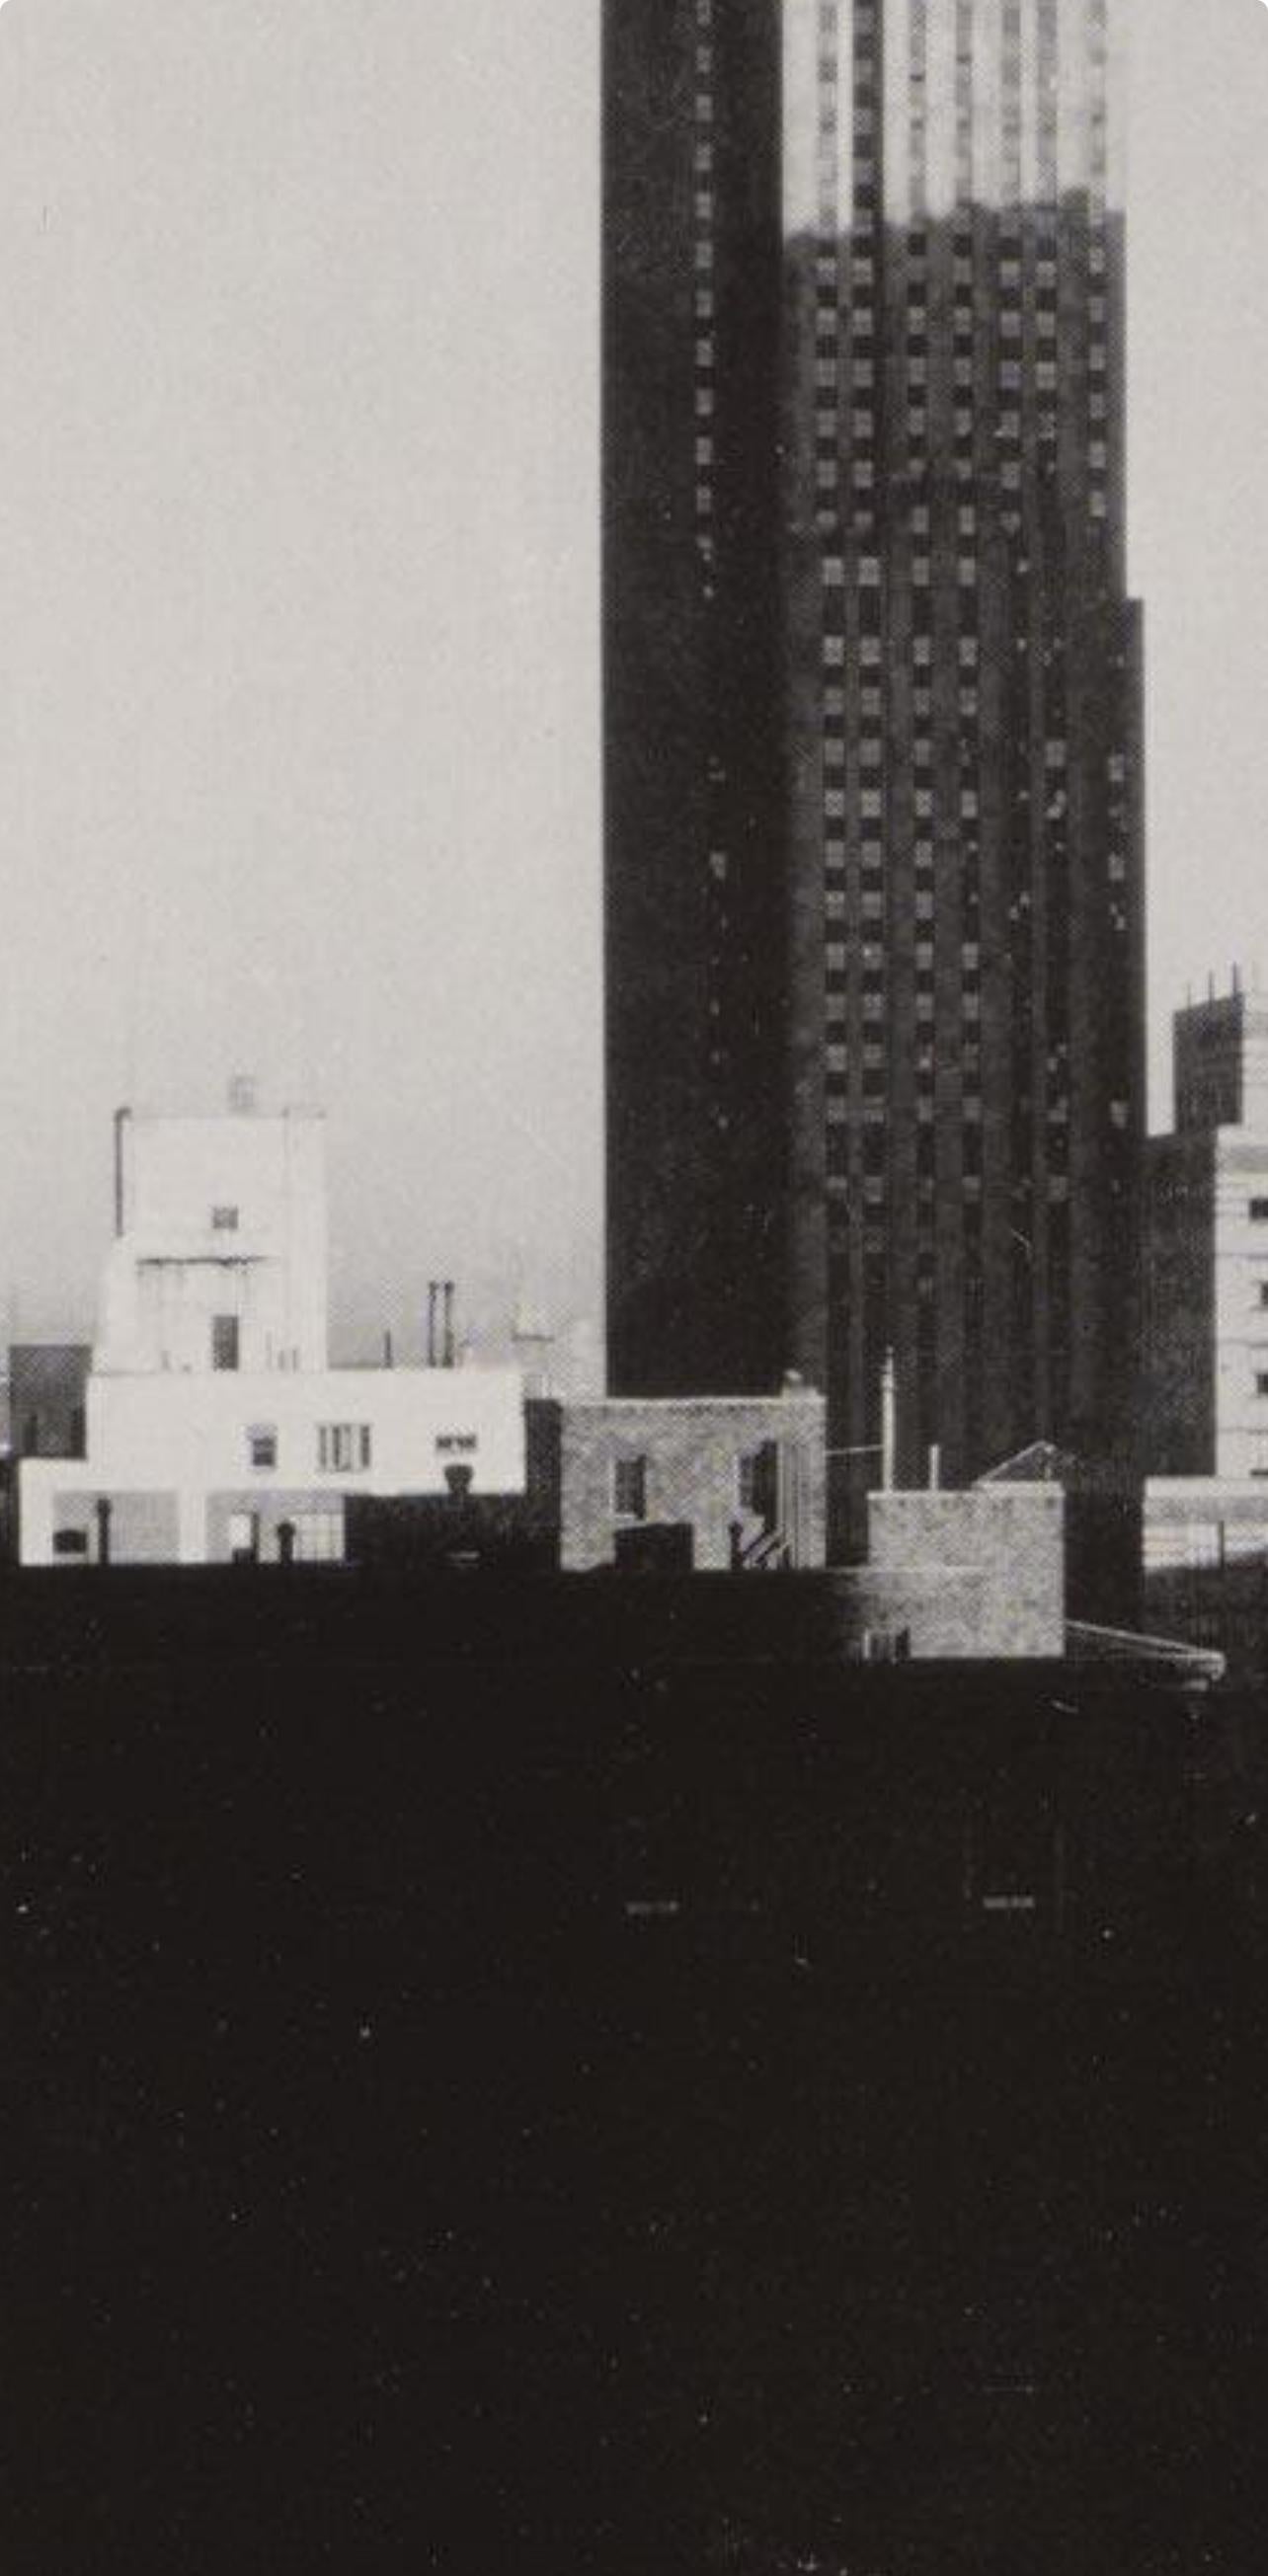 Stieglitz, New York Series, Spring, Alfred Stieglitz Memorial Portfolio (after) For Sale 4